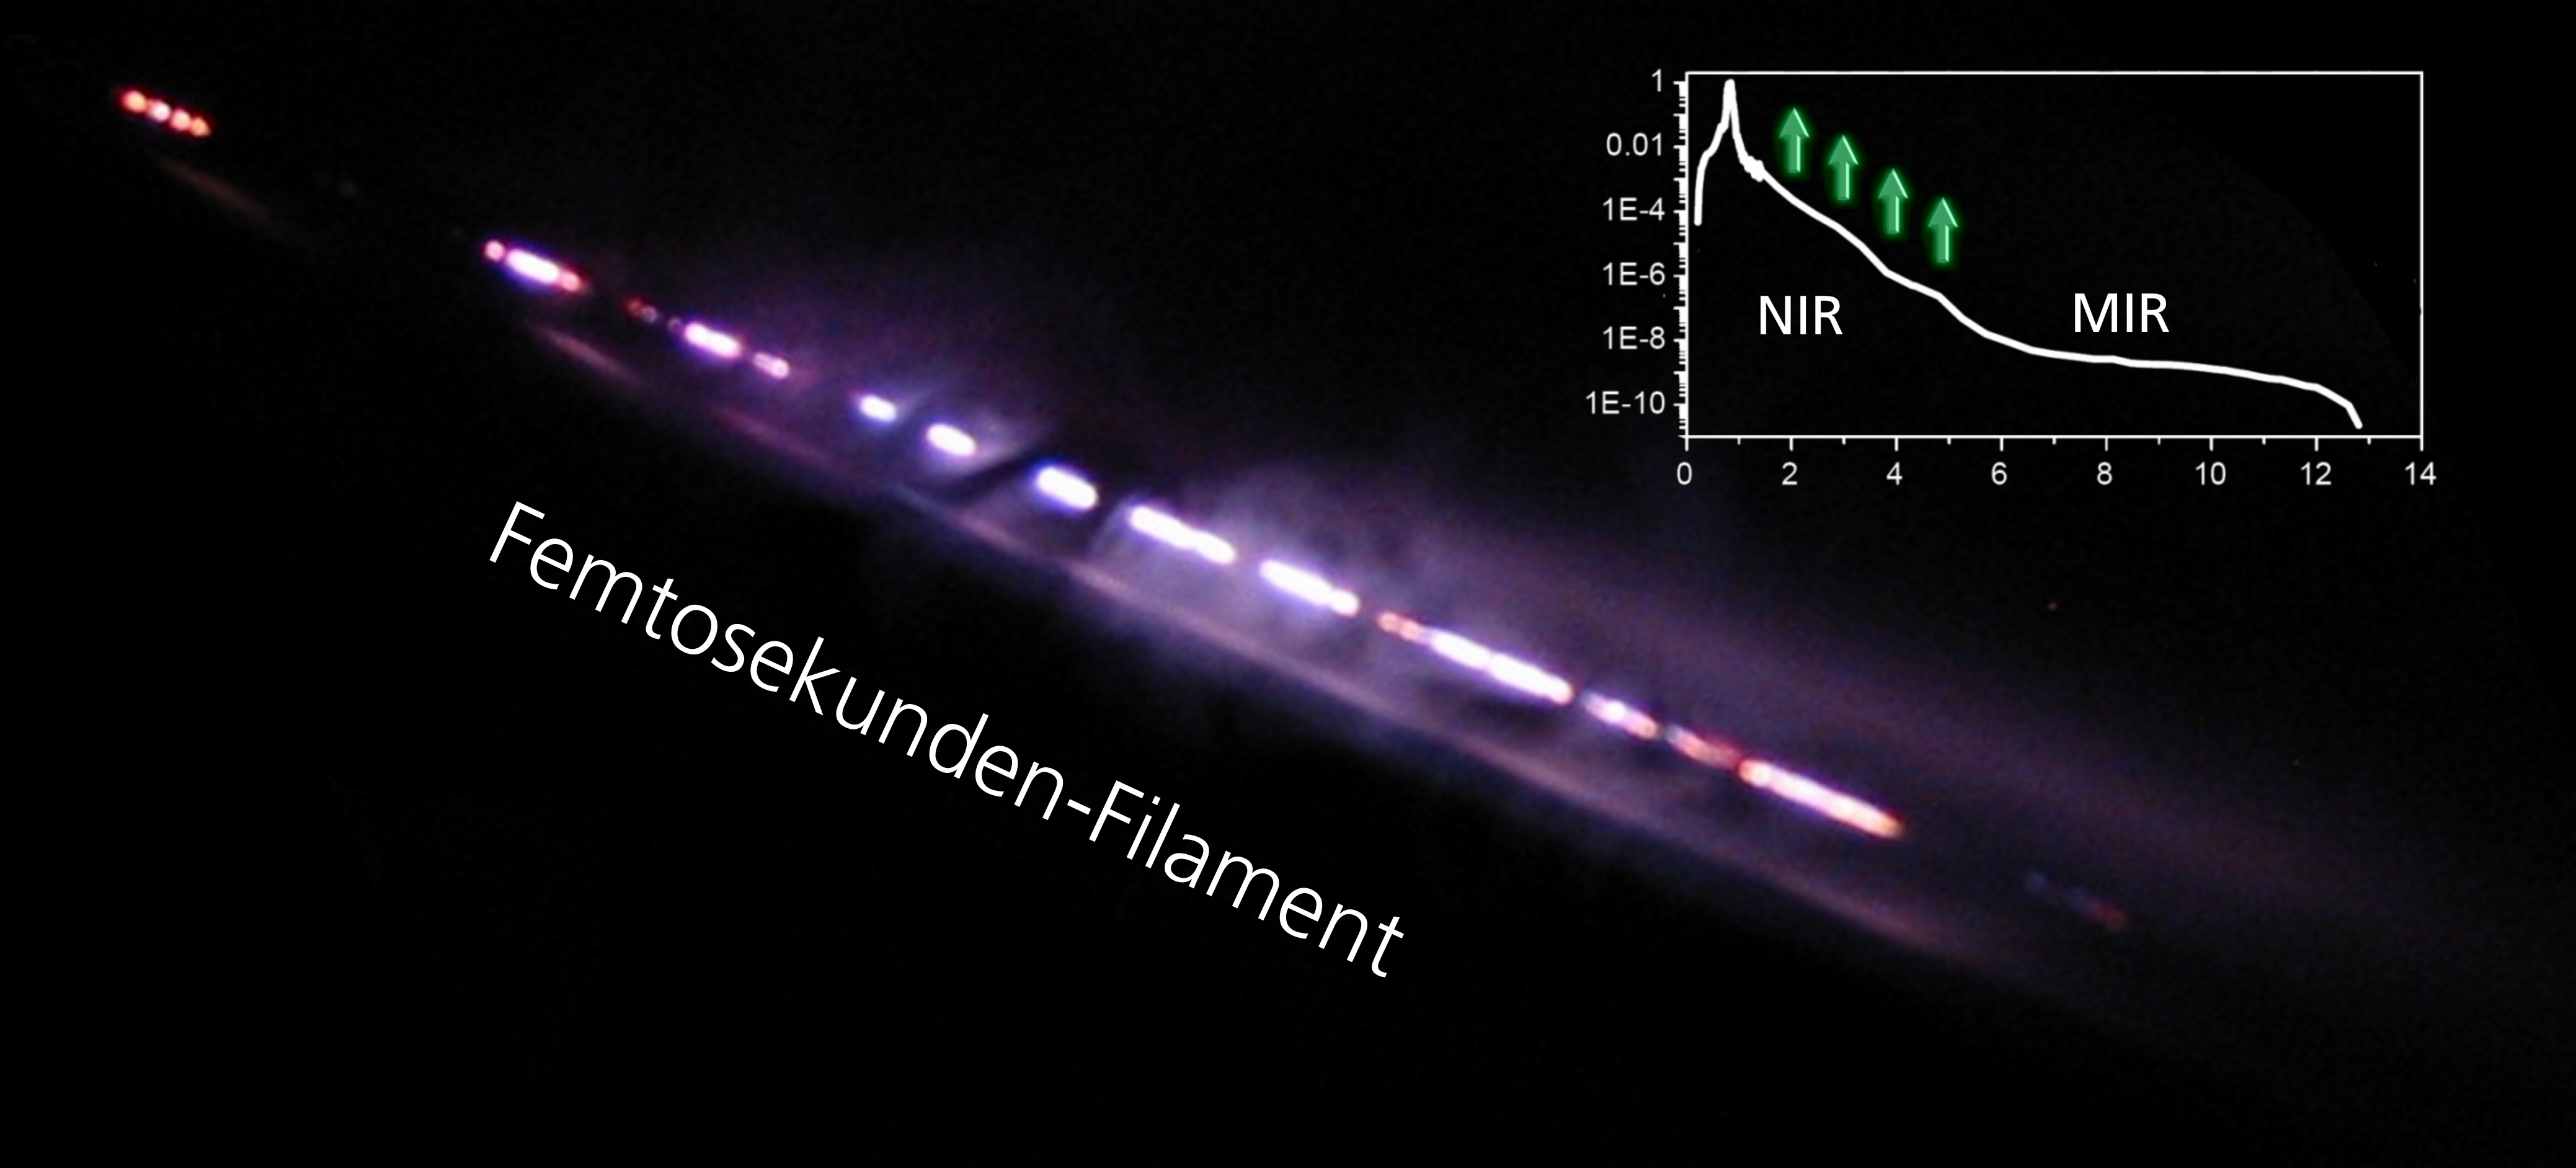 Spectral distribution of laser pulses through filamentation